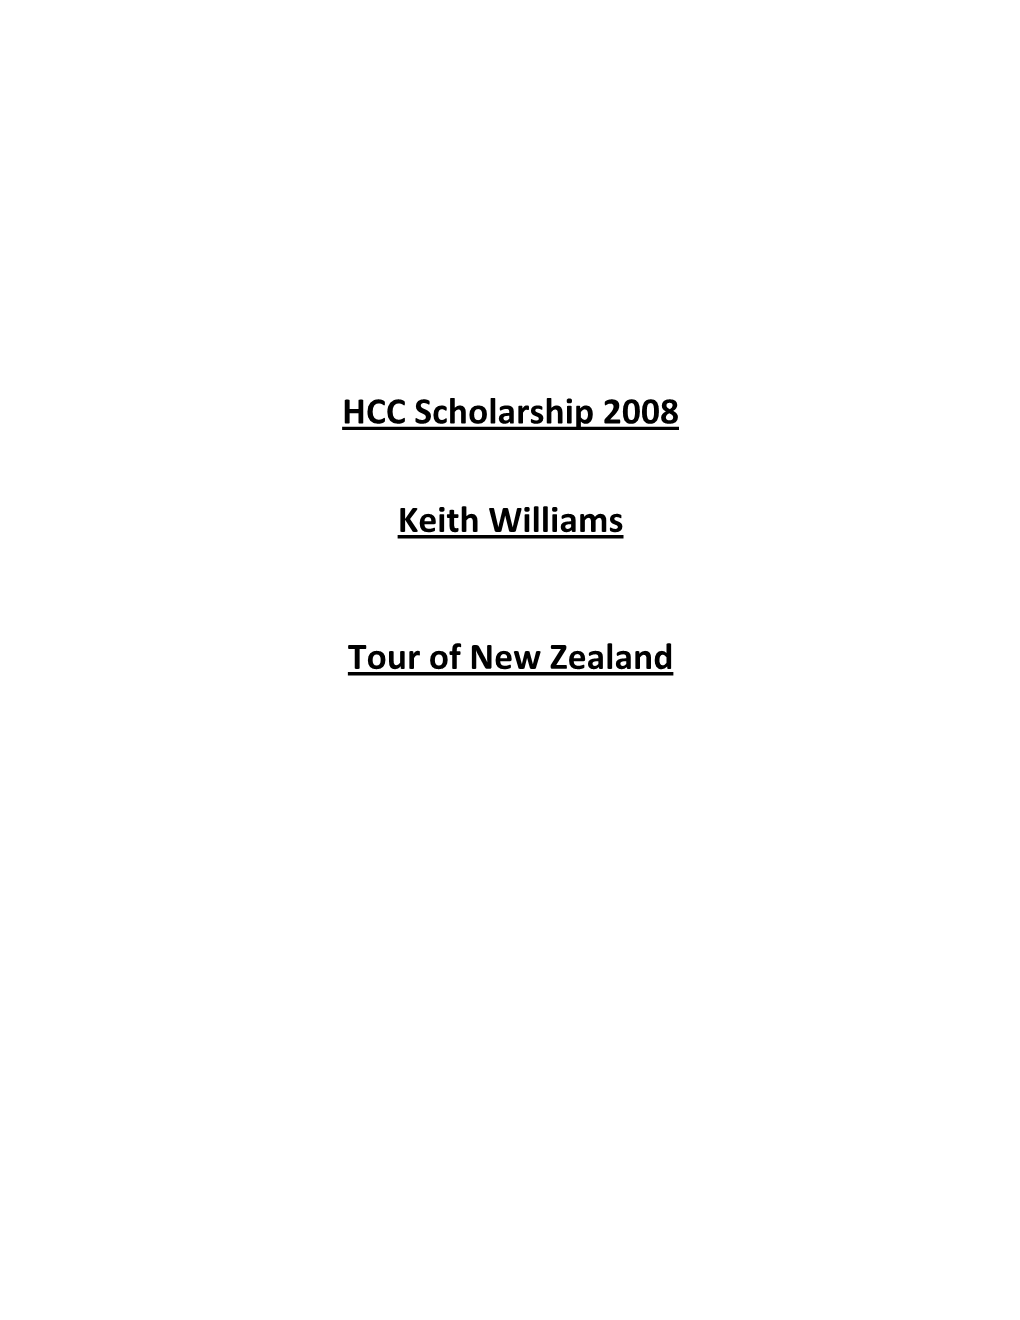 HCC Scholarship 2008 Keith Williams Tour of New Zealand